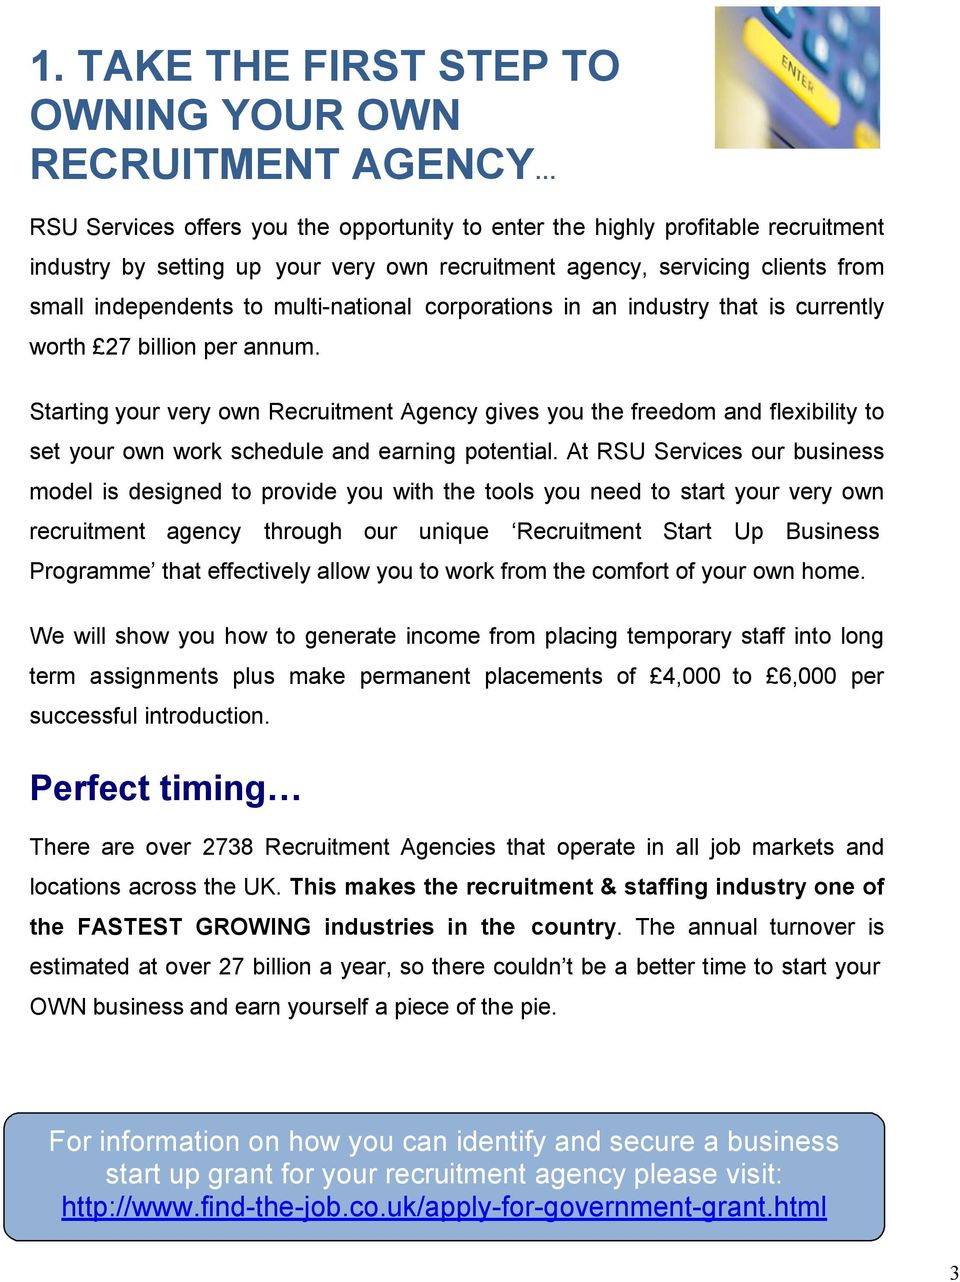 Start Your Own Recruitment Agency